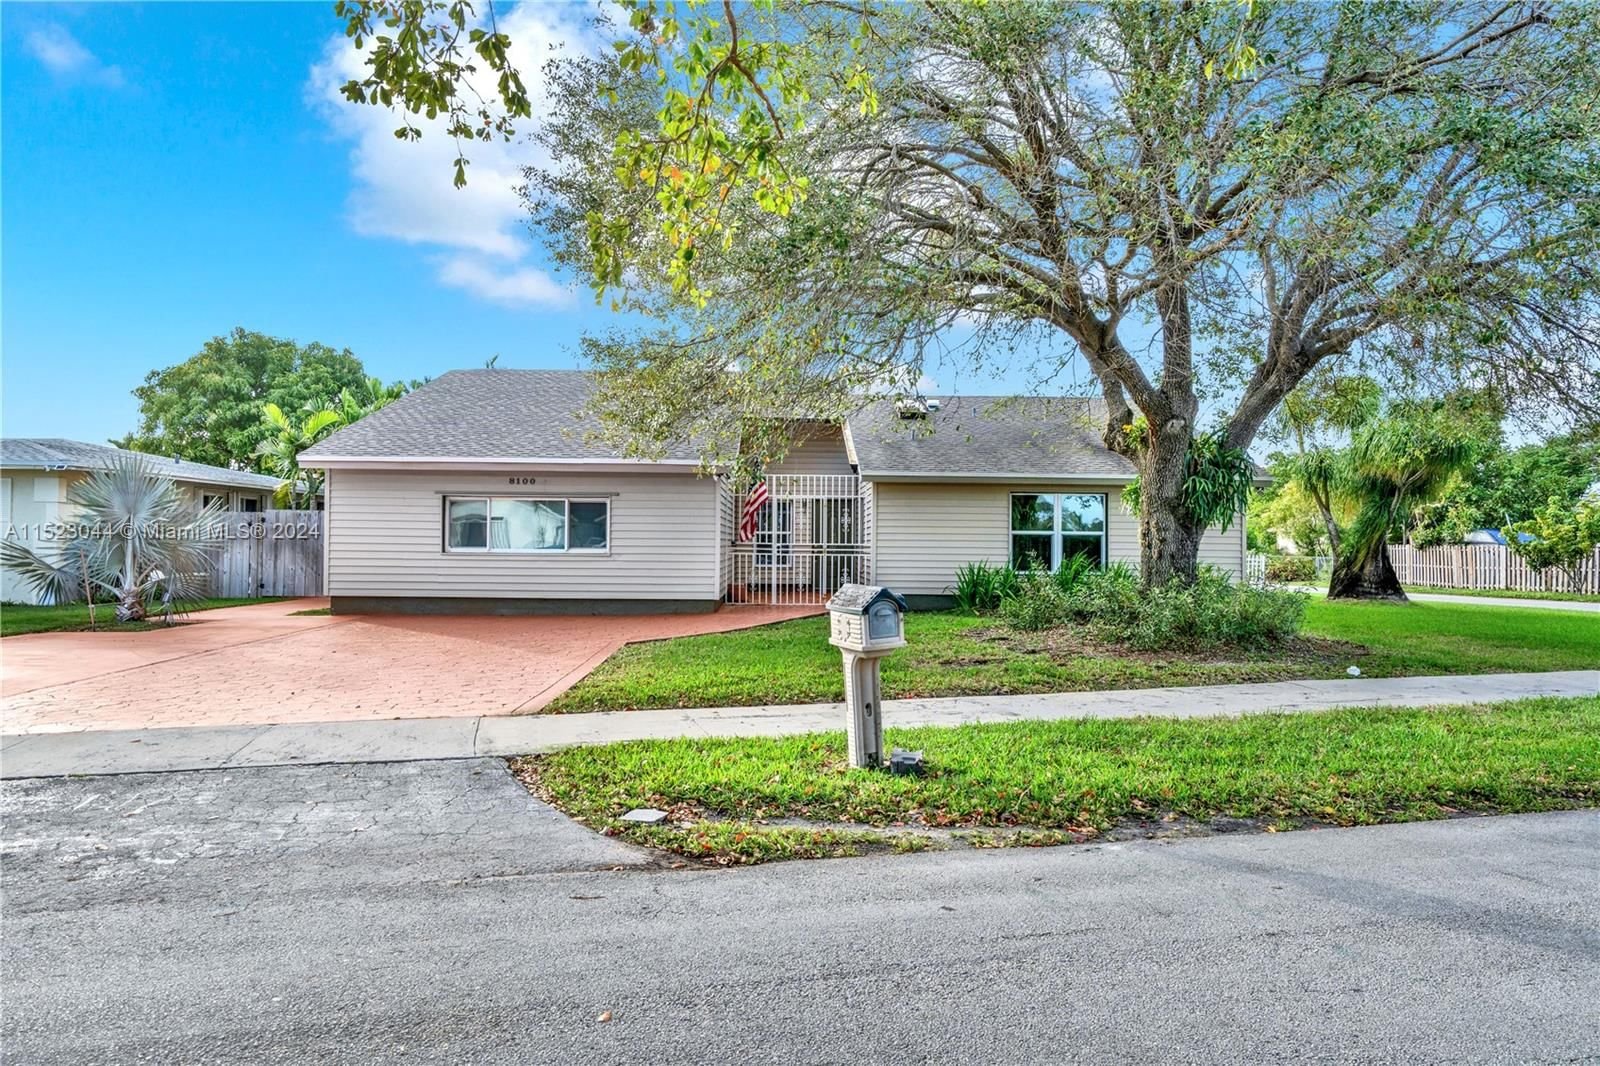 Real estate property located at 8100 133rd Ct, Miami-Dade County, WINSTON PARK UNIT 7, Miami, FL